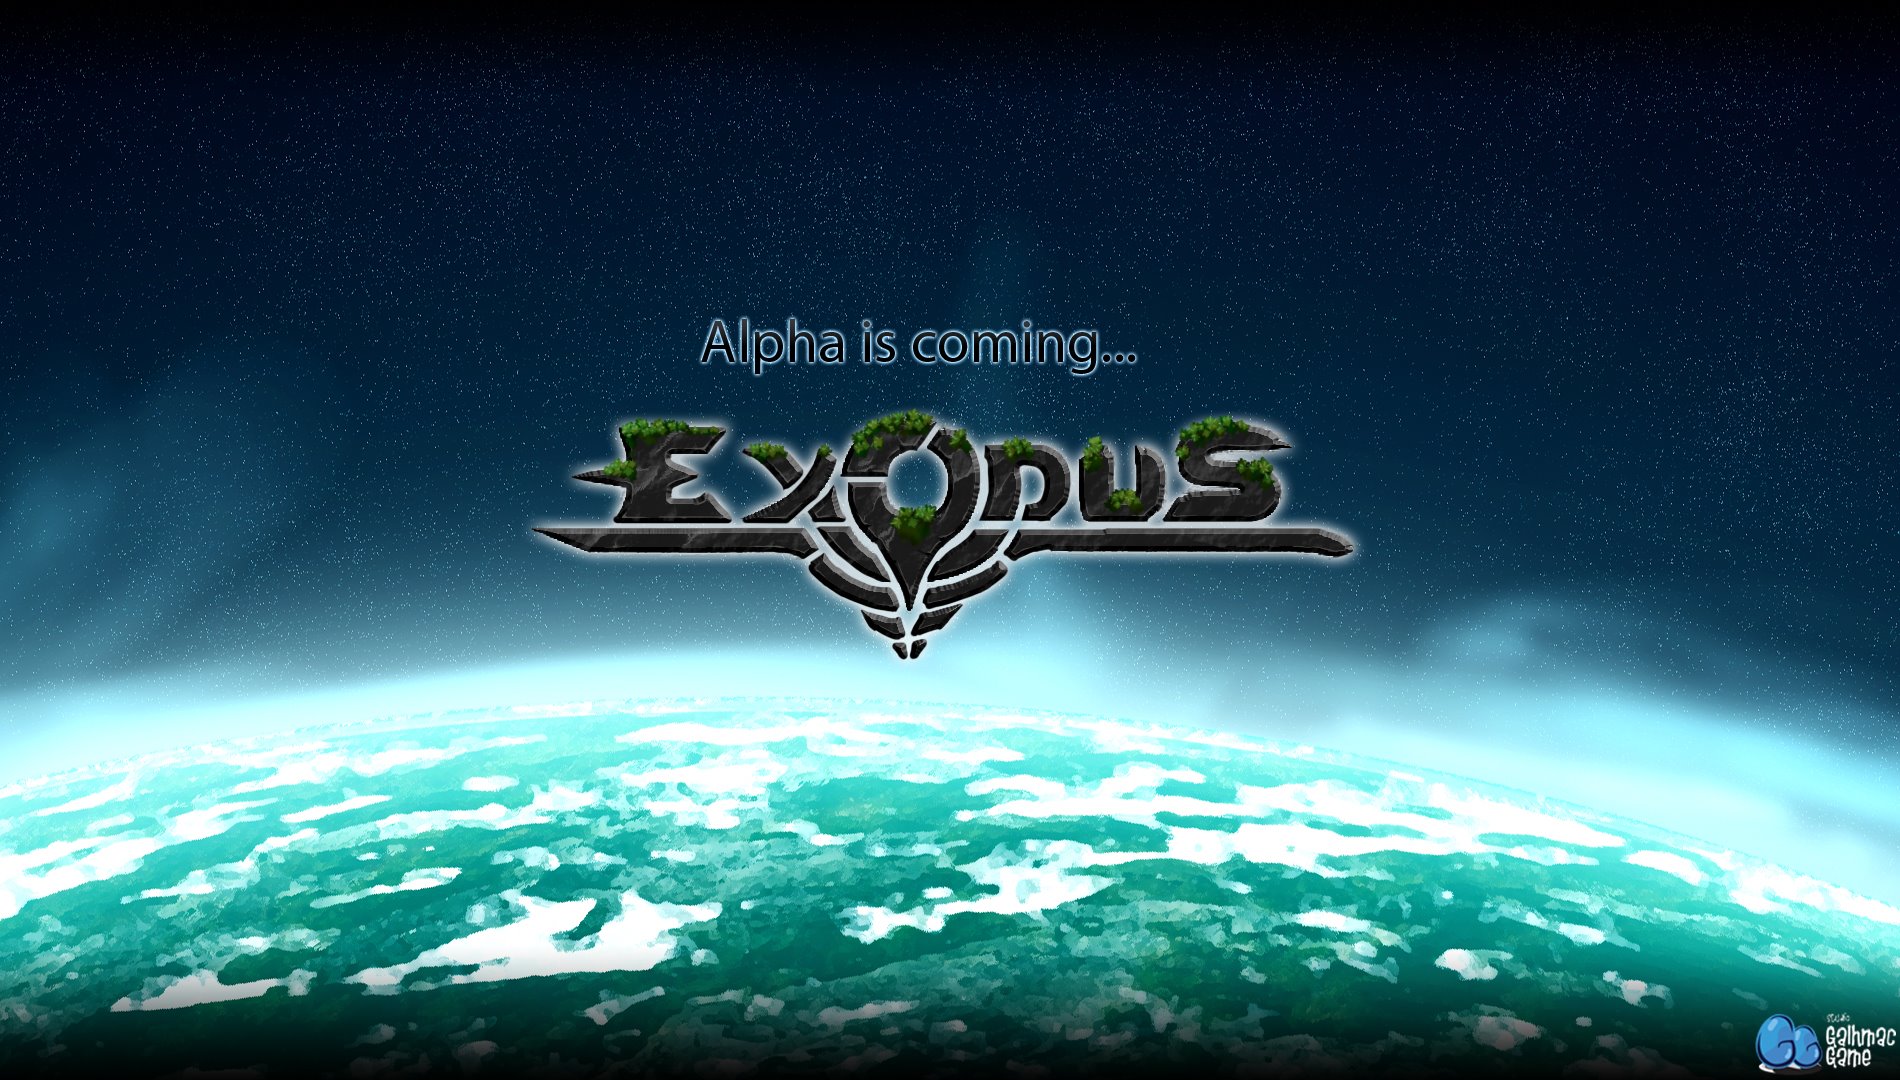 Exodus : Something is coming...